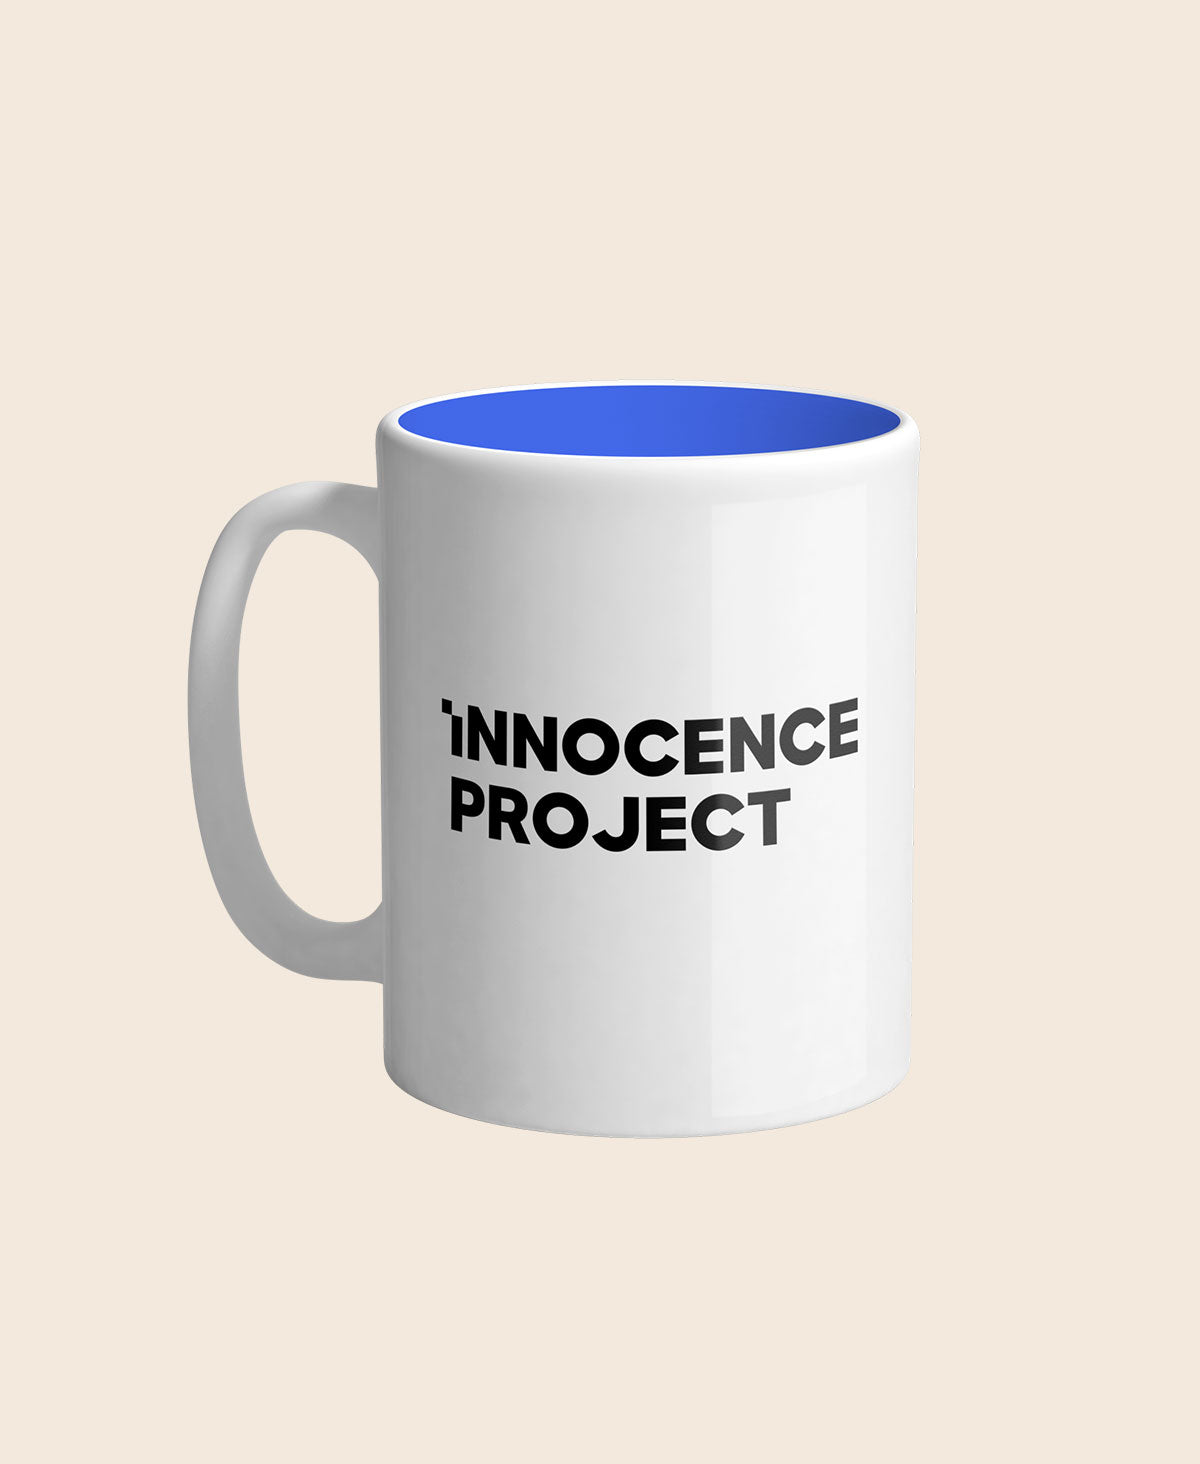 Innocence Project 11oz Mug White/Blue